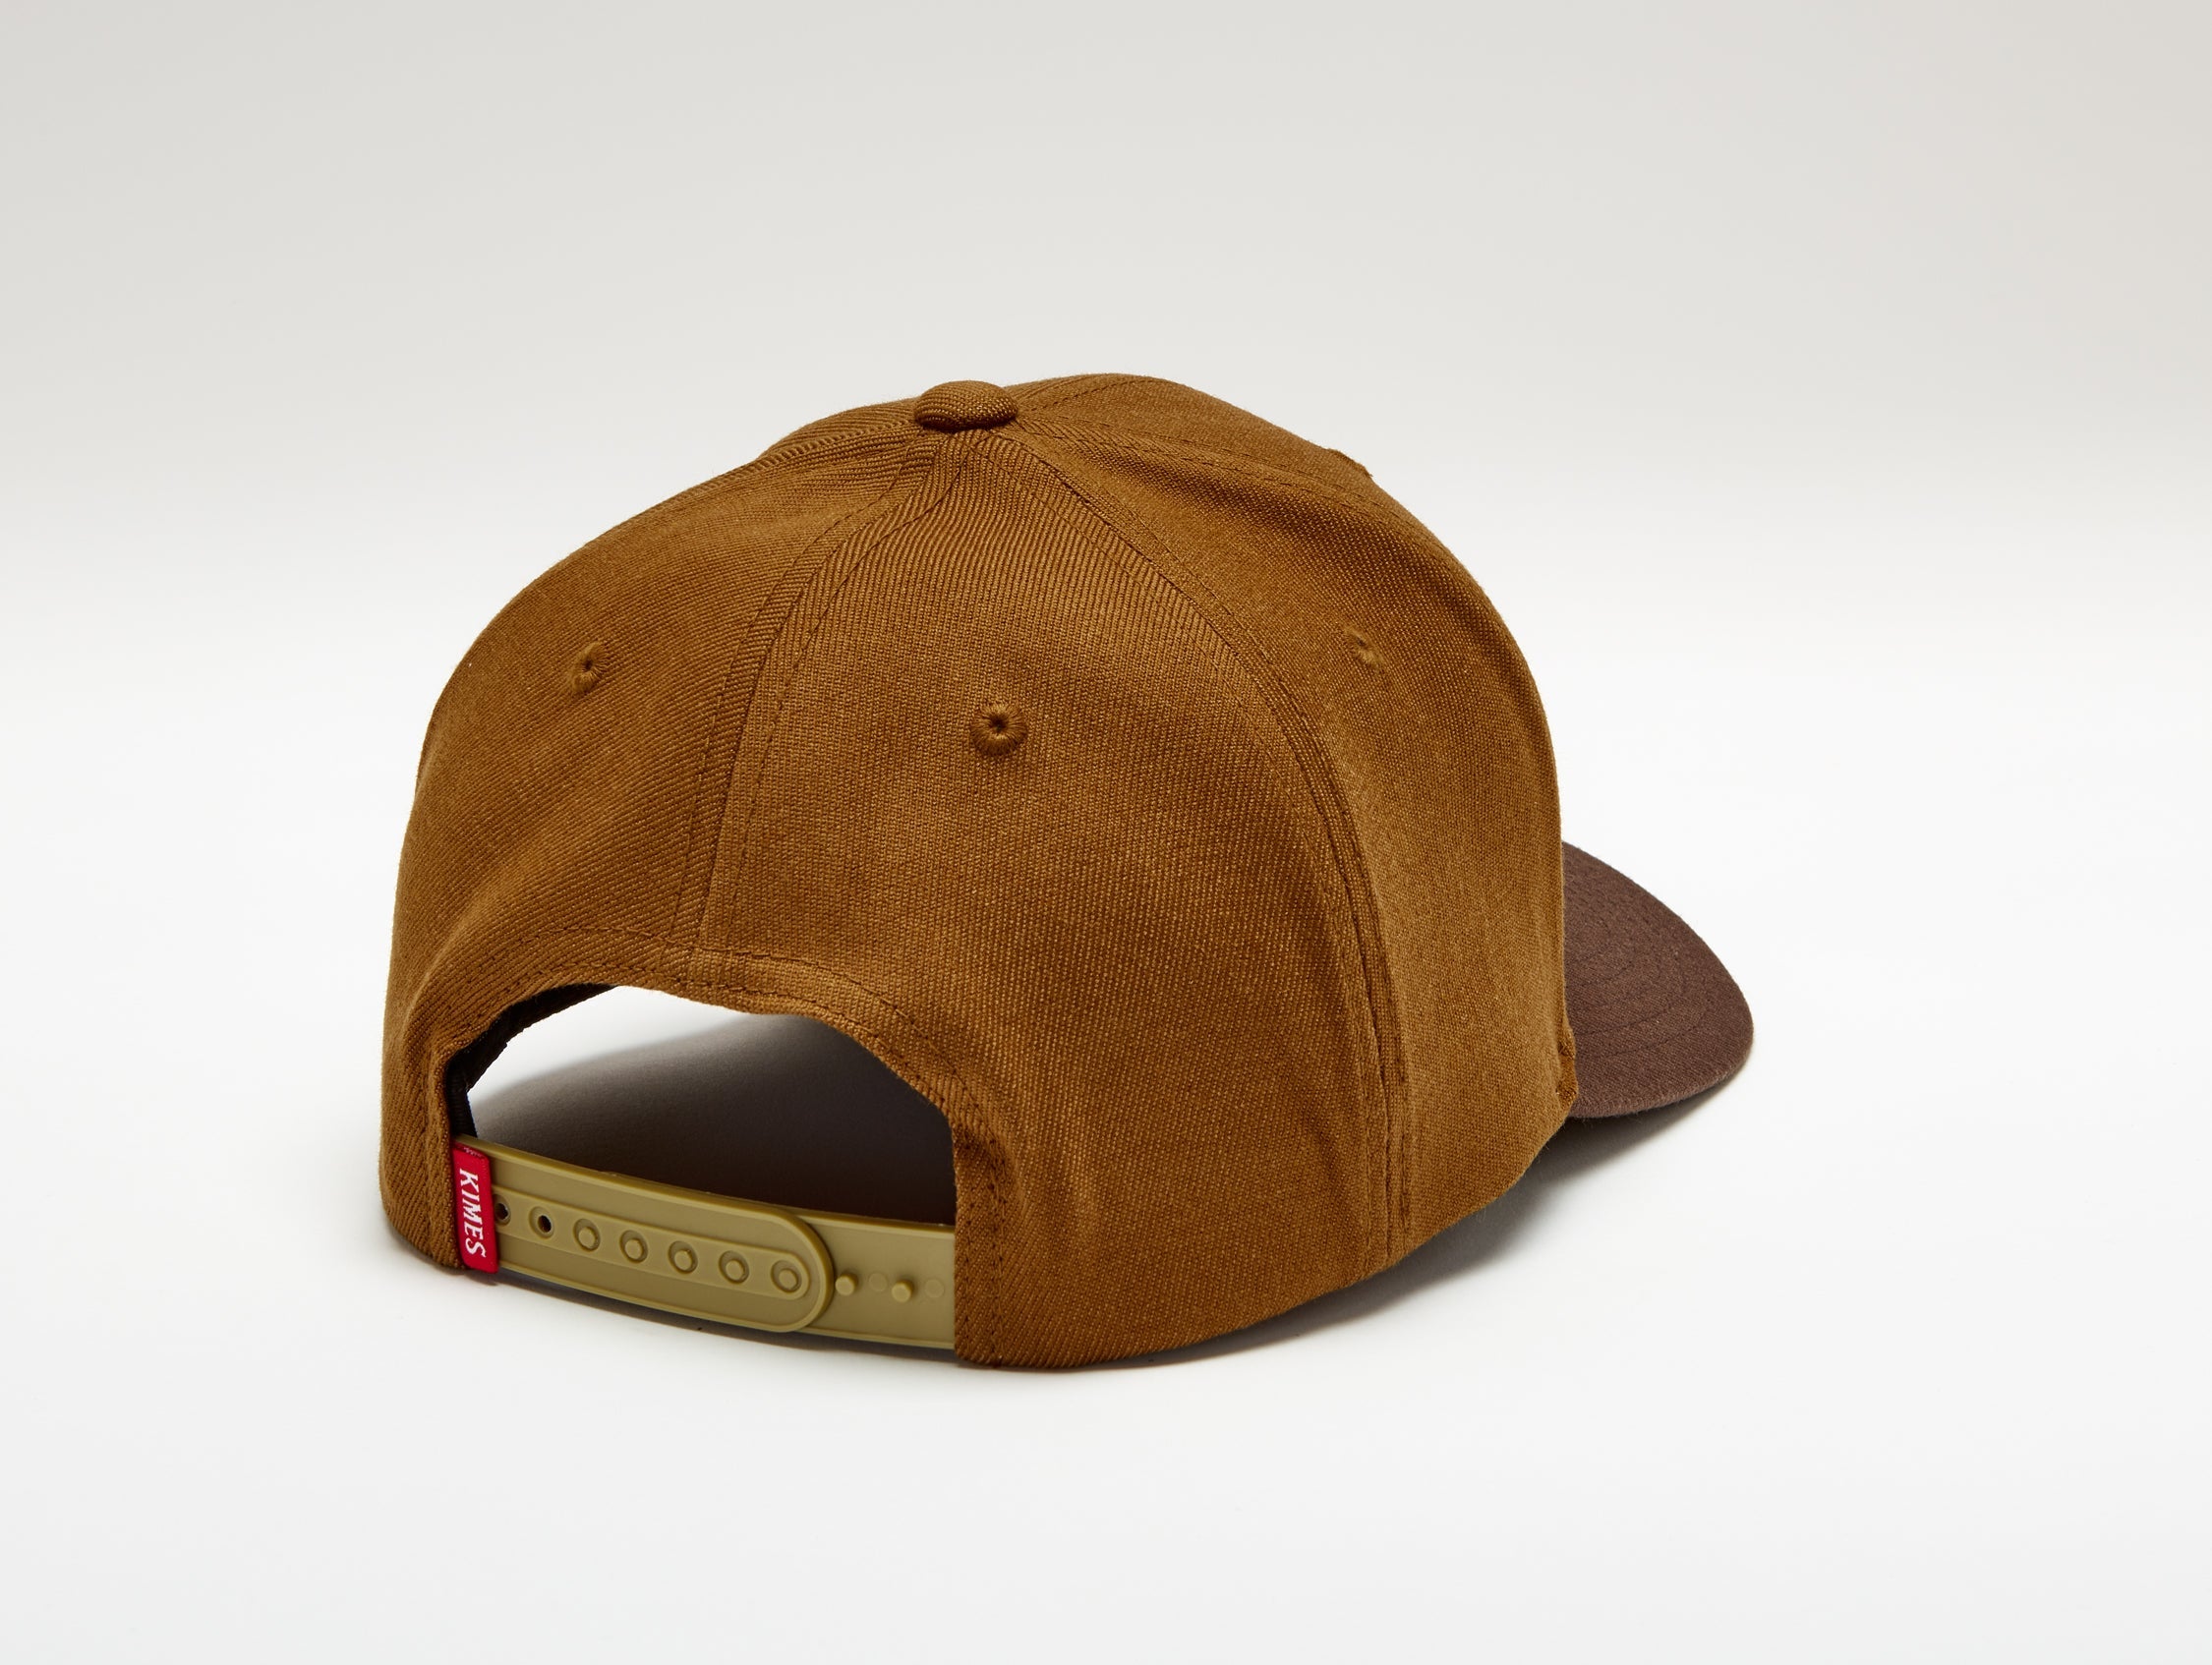 Kimes Ranch Premium Denim Hat